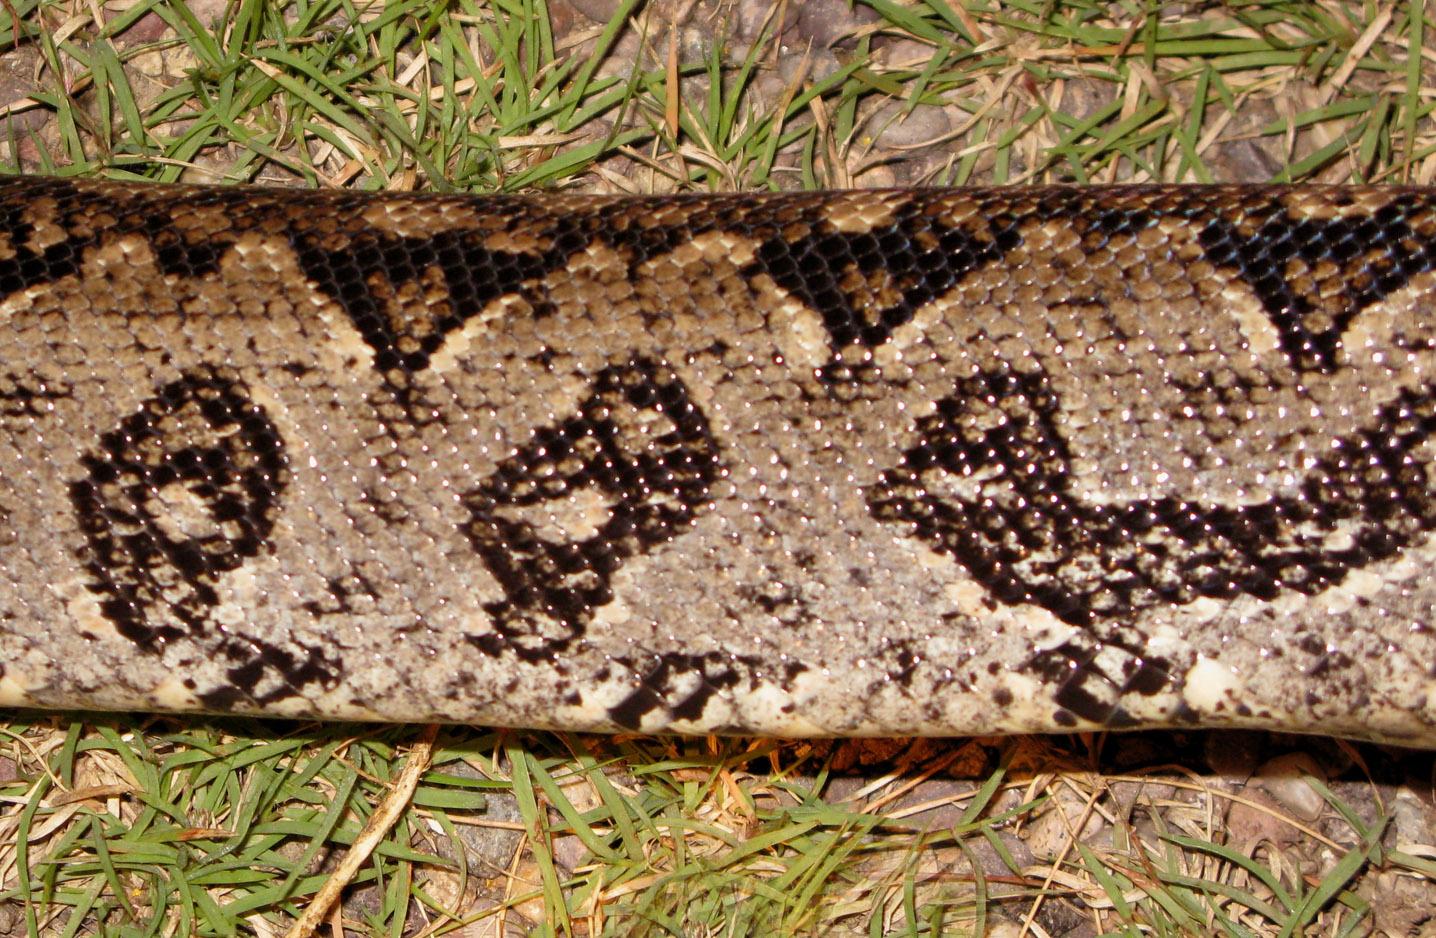 Boa constrictor image